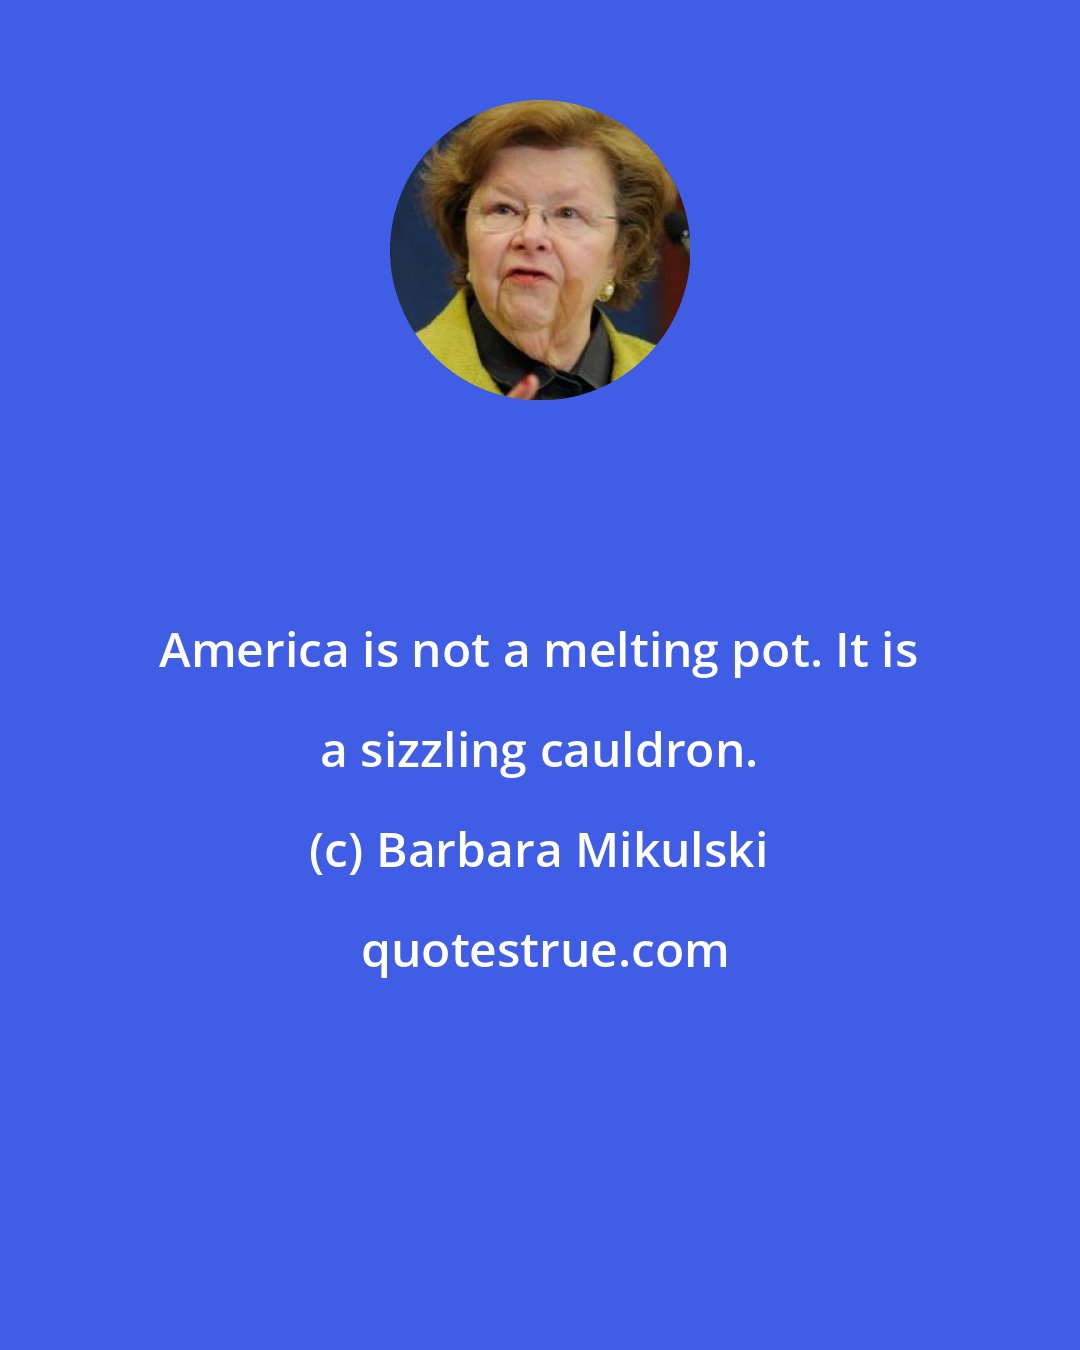 Barbara Mikulski: America is not a melting pot. It is a sizzling cauldron.